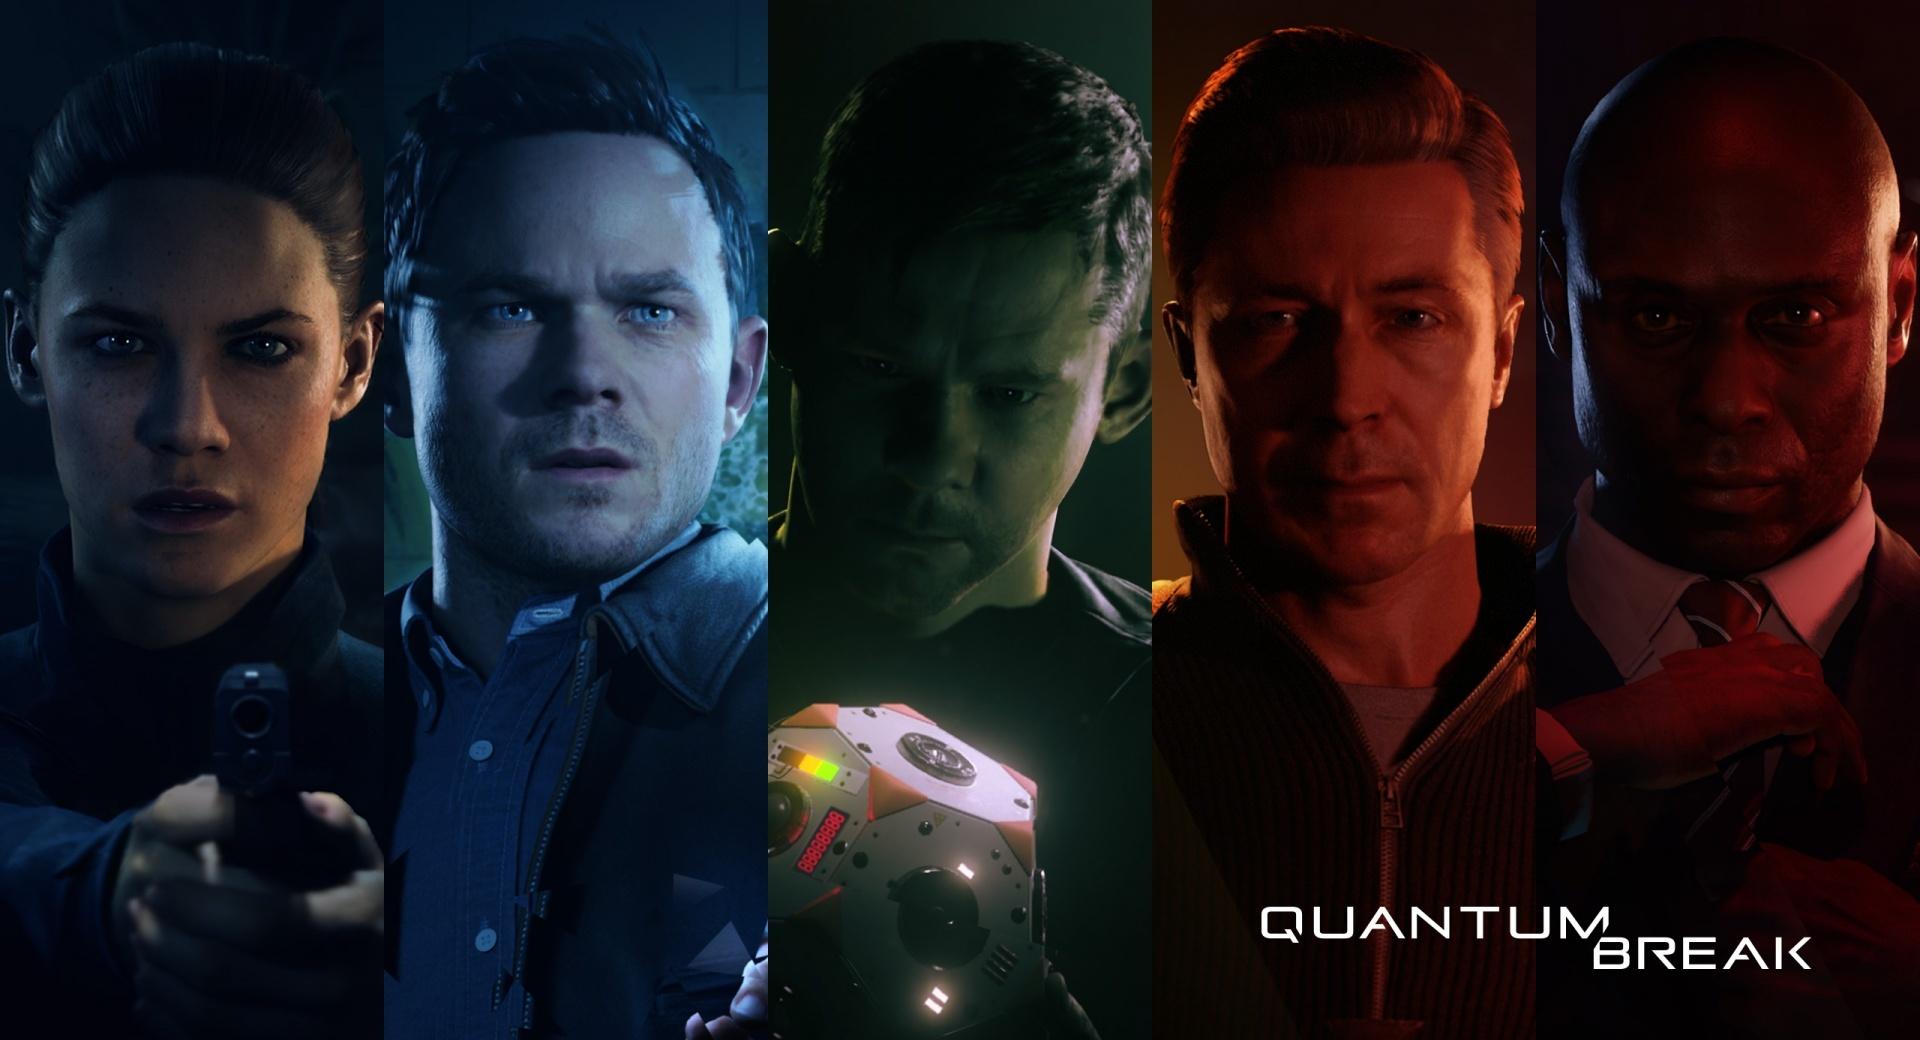 Quantum Break Cast at 1280 x 960 size wallpapers HD quality